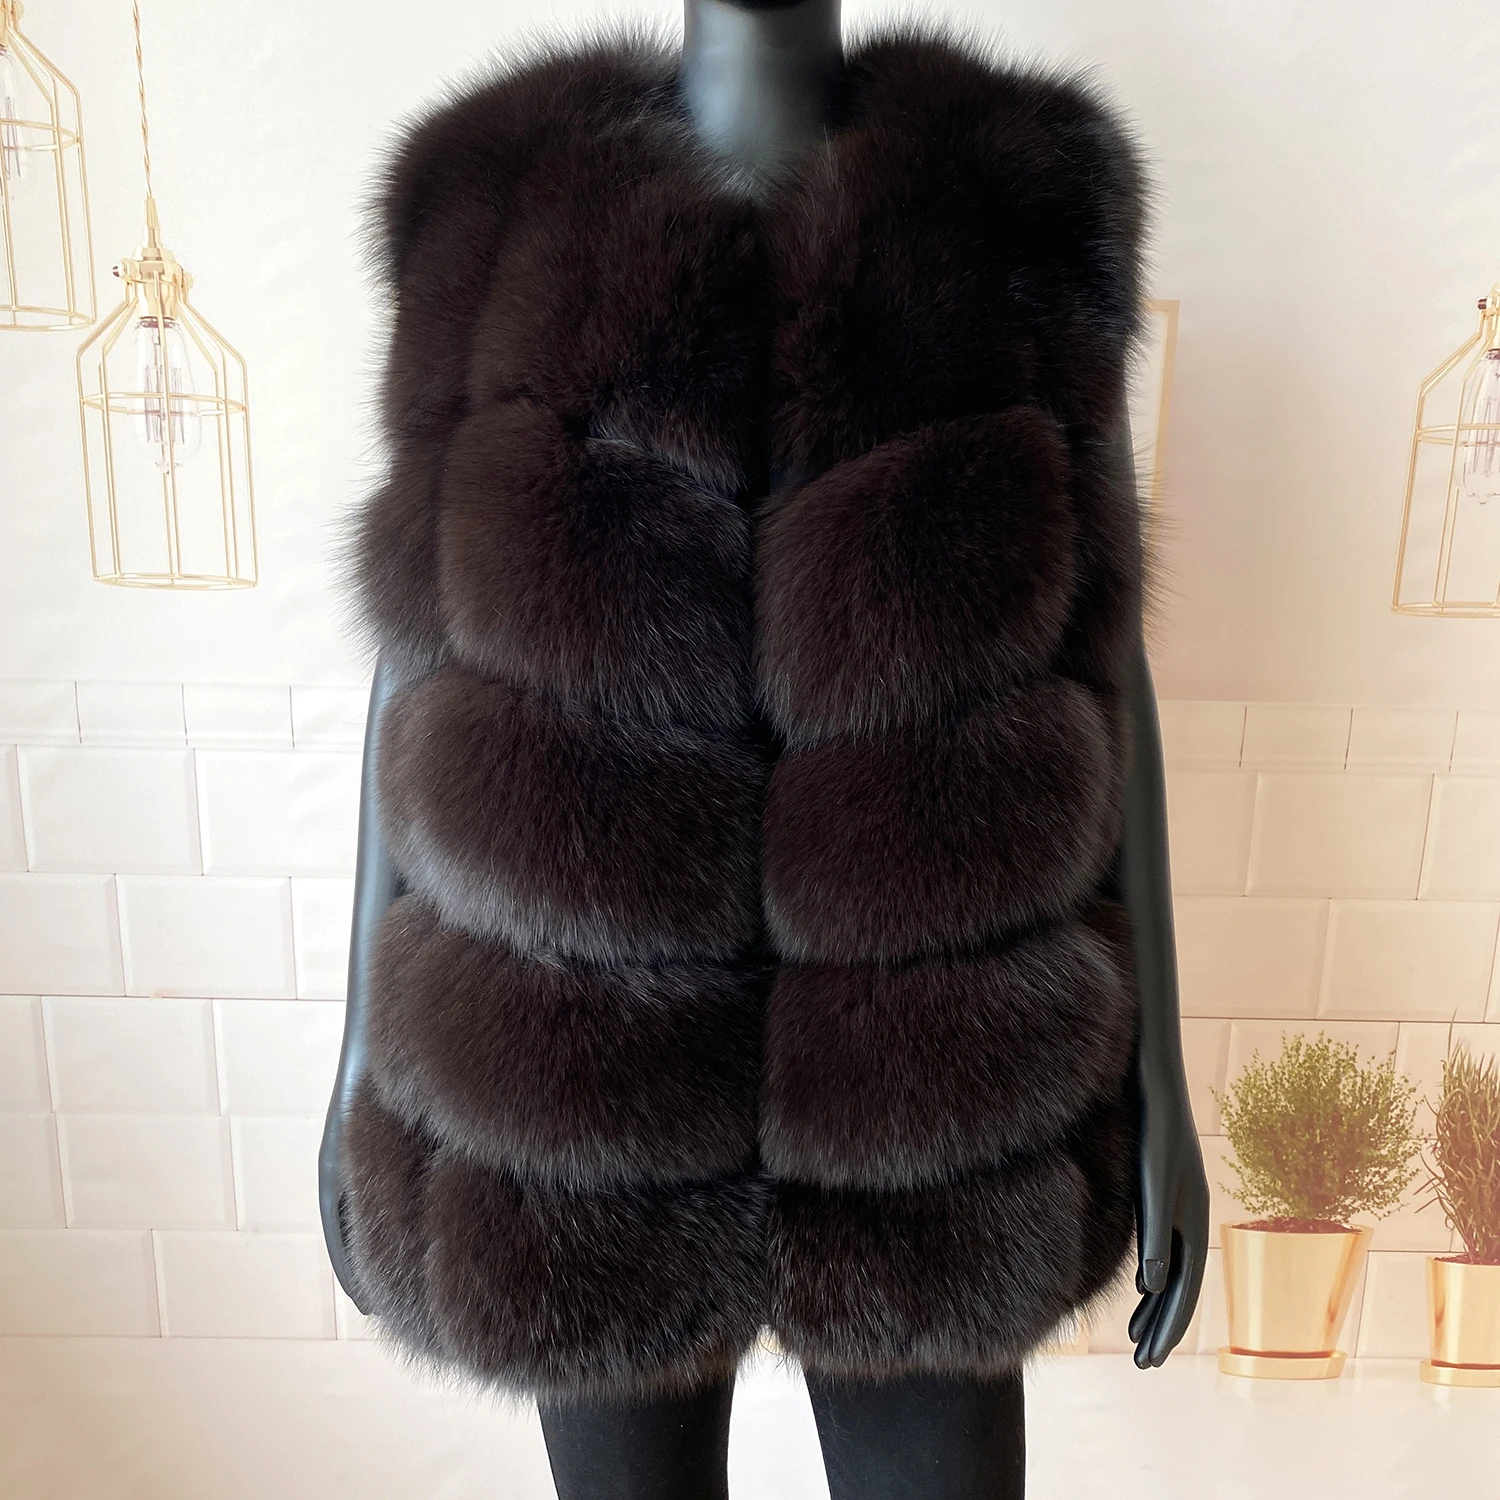 2020 New Women's Winter Real Fur Coat High Quality  Natural Fox Fur Vest Fashion Luxurious Warm Sleeveless Dark buckle jacket bubble coat women Coats & Jackets